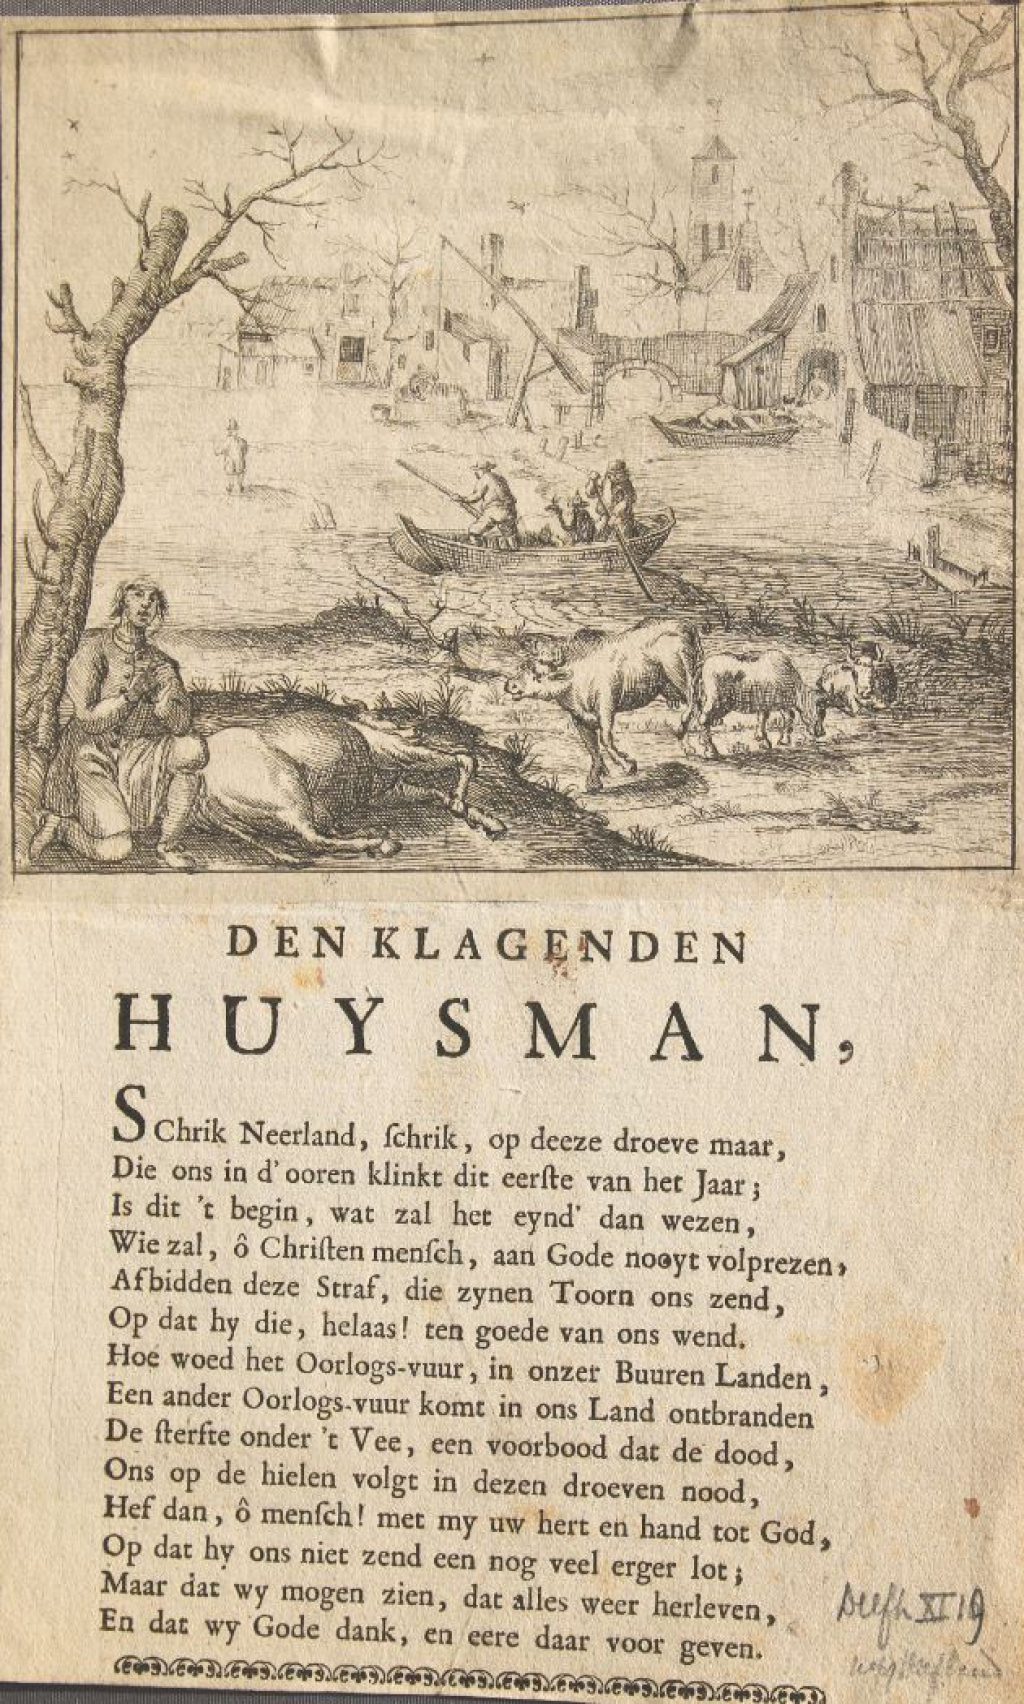 Prent ‘Den klagenden huysman’ over de veepest, 1745 (Archief 598, inv.nr 678)